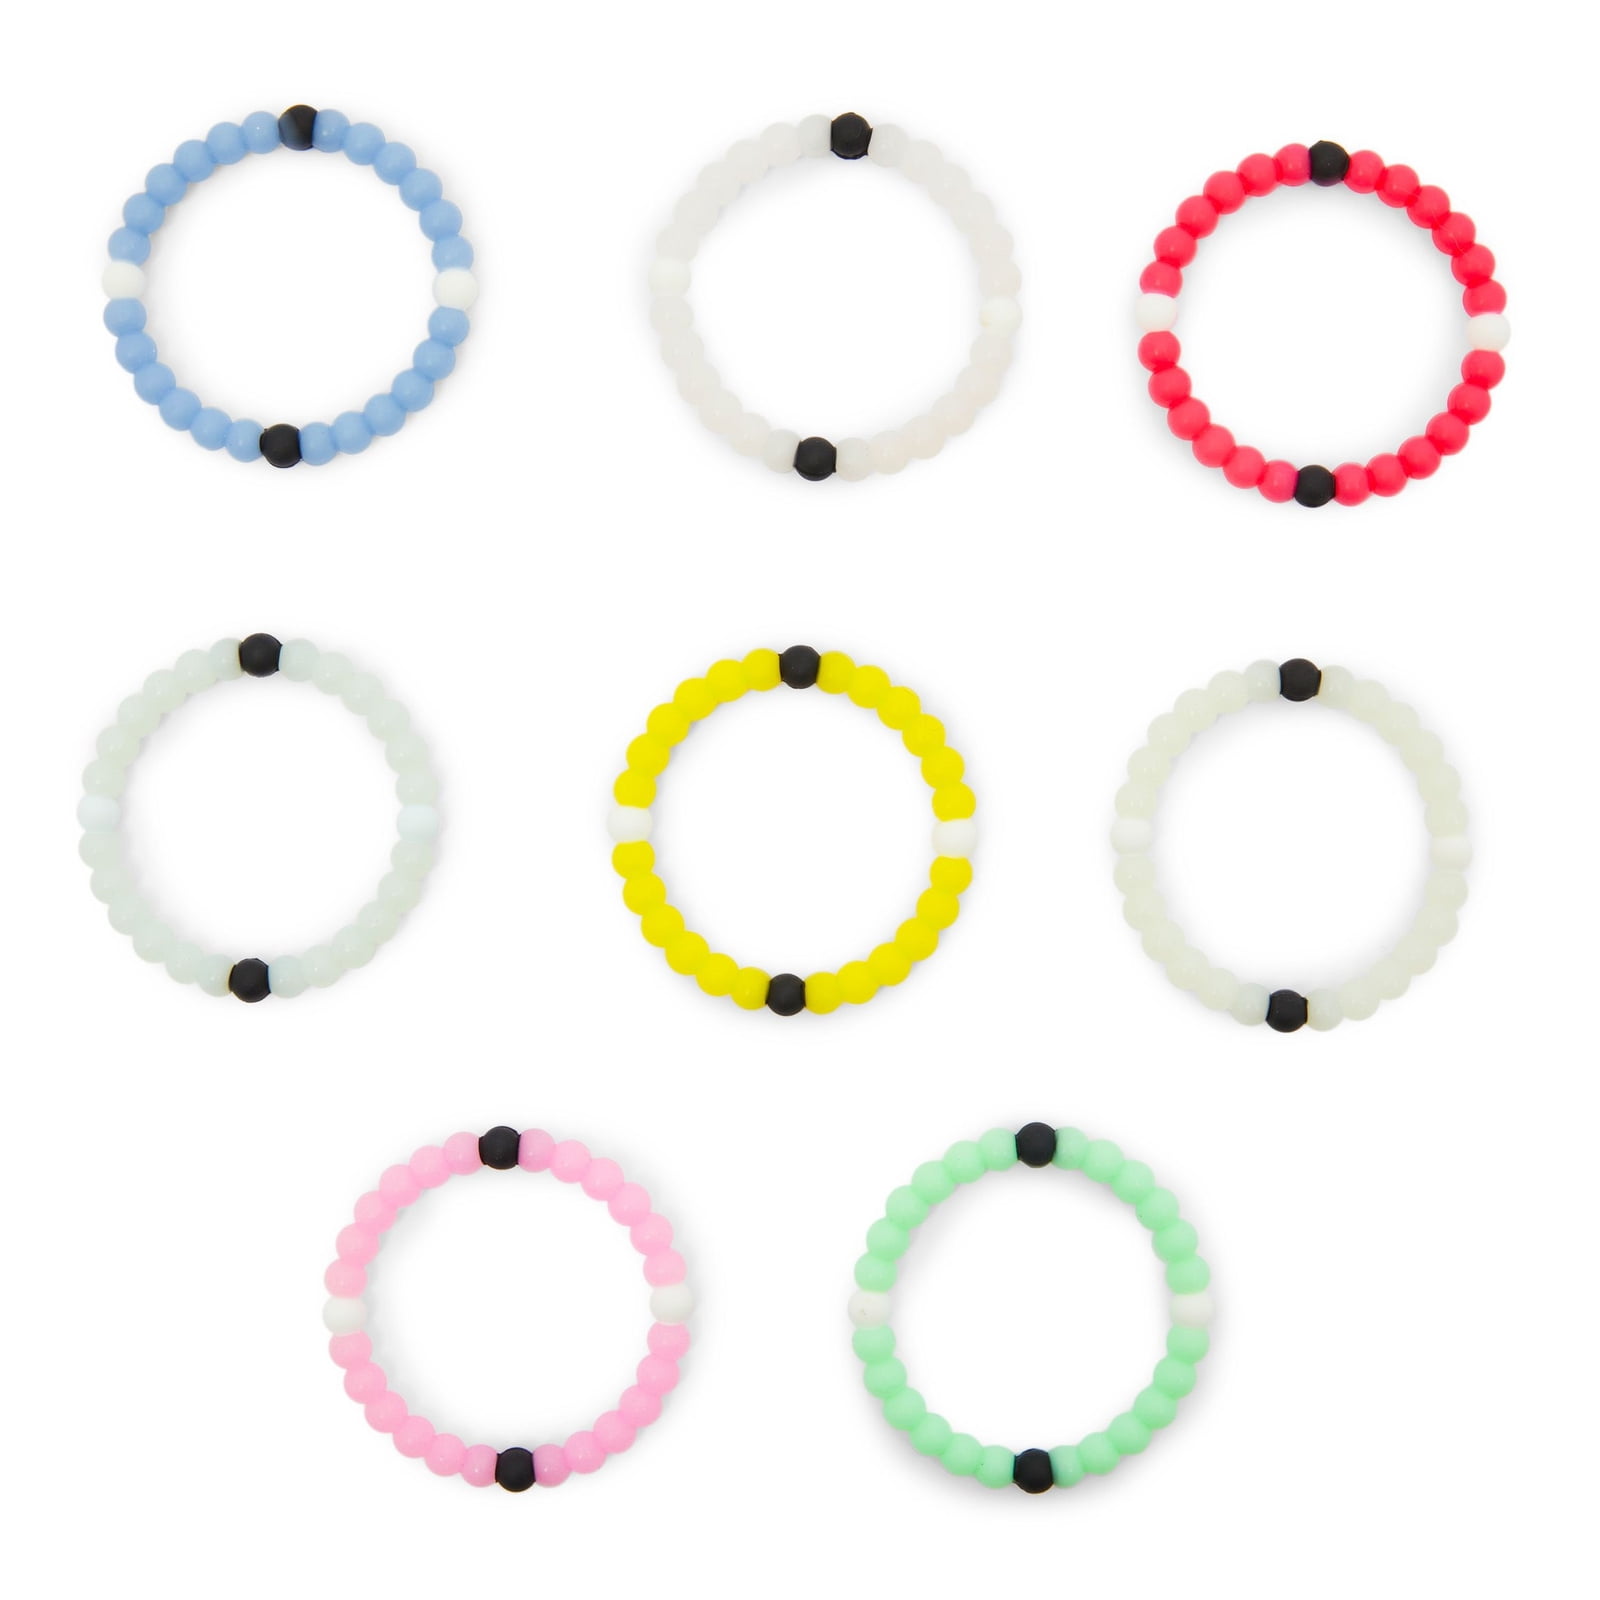 12 different styles per lot #B1254 12 Brand New Assorted Friendship Bracelets 